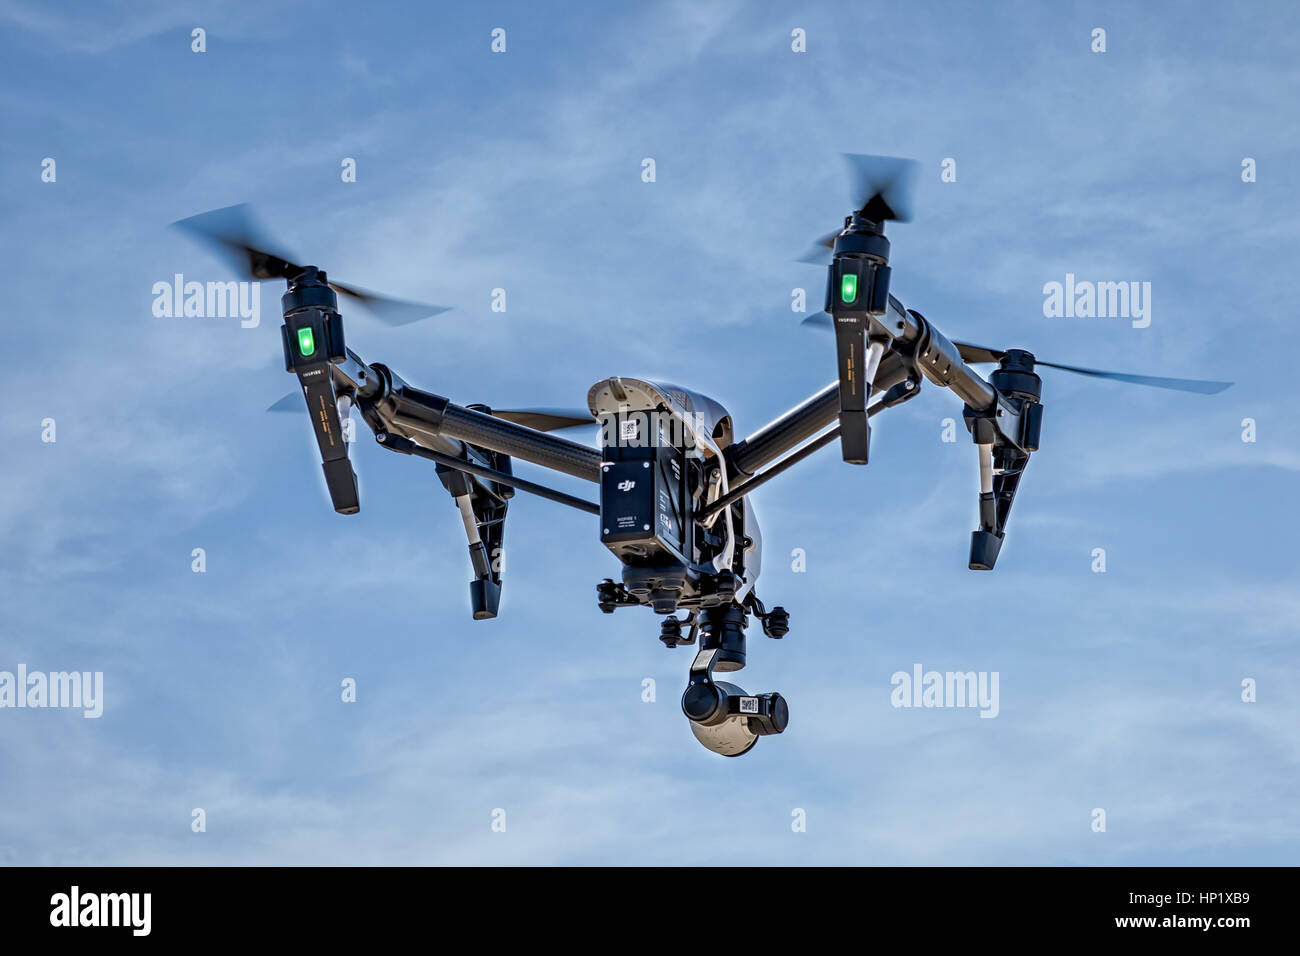 DJI Drone Phantom ispirare al di sopra del cielo Foto Stock